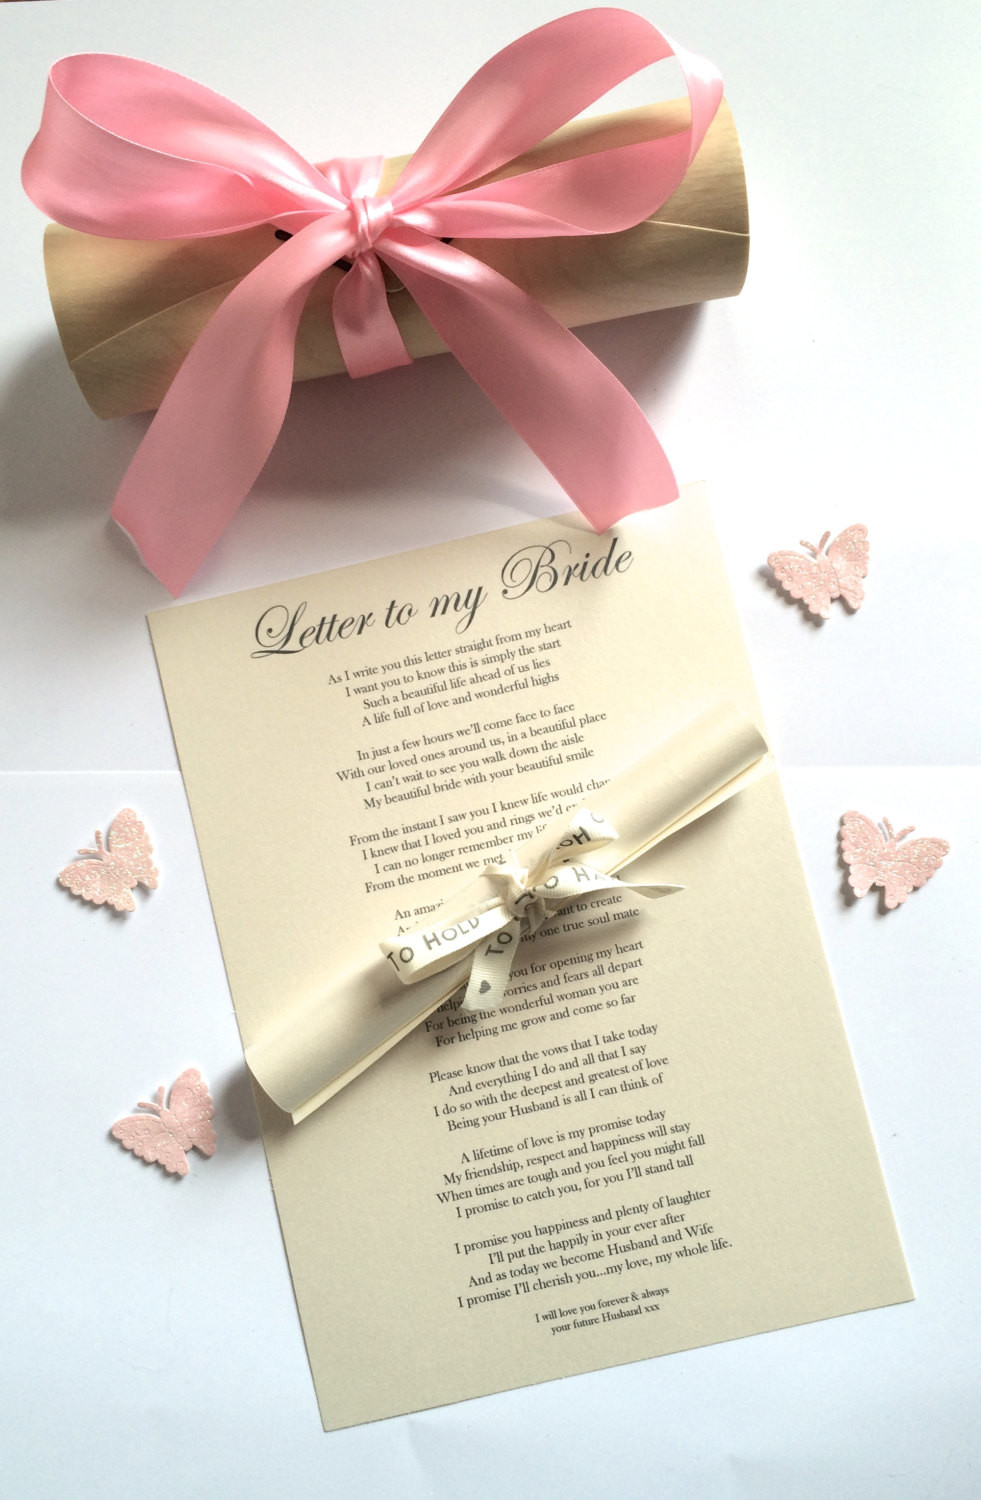 Gift Ideas For Bride On Wedding Day
 Wedding Gift for Bride from Groom on Wedding Day Personalised